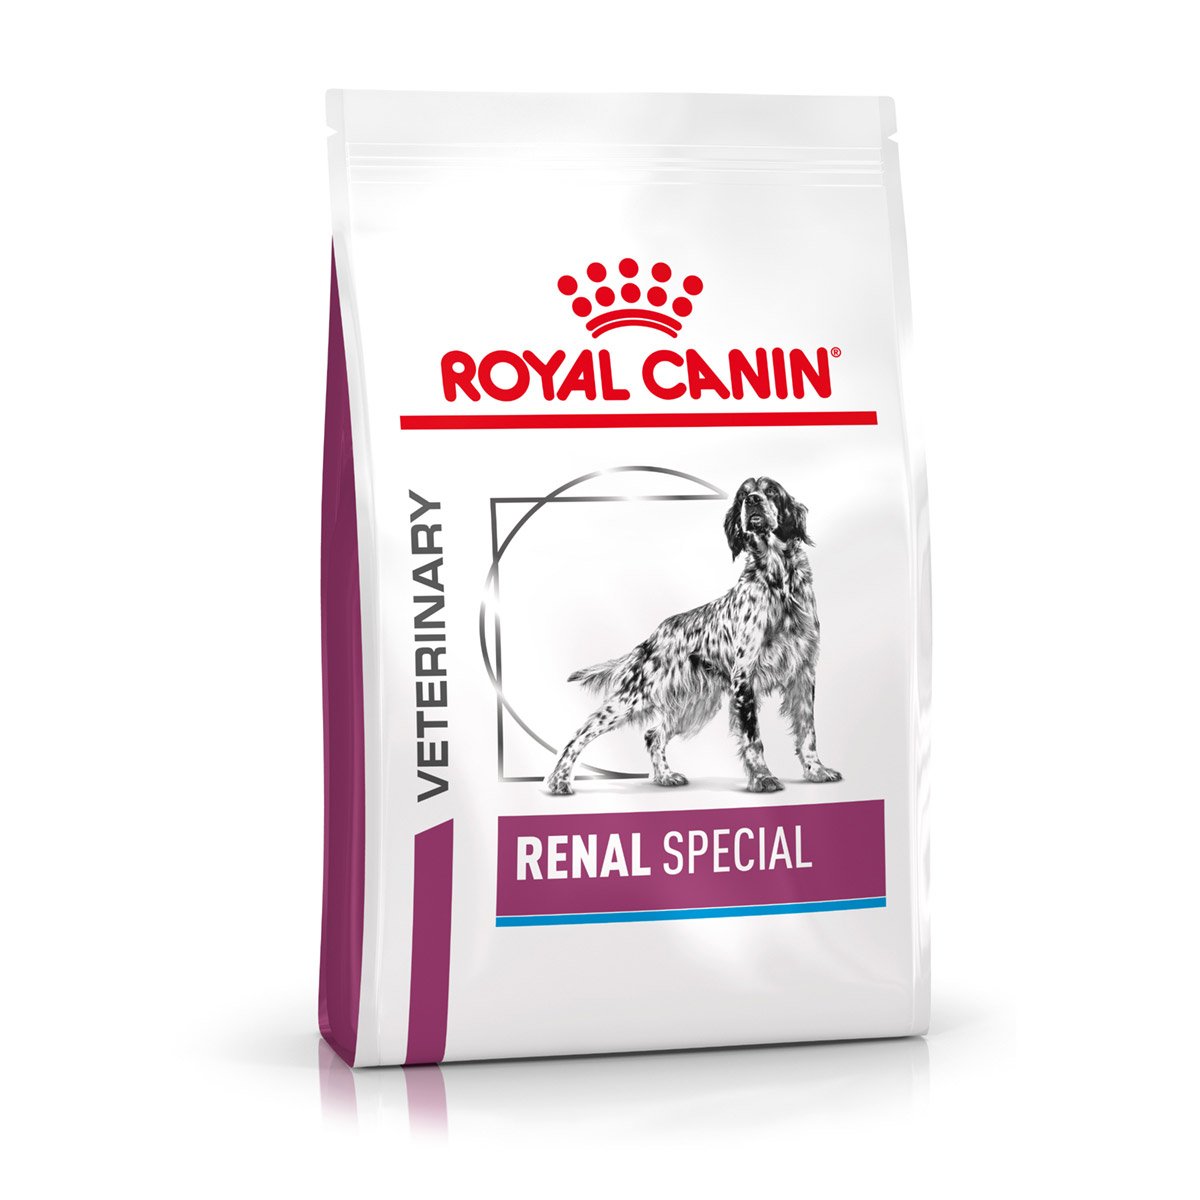 ROYAL CANIN® Veterinary RENAL SPECIAL Trockenfutter für Hunde 10kg von Royal Canin